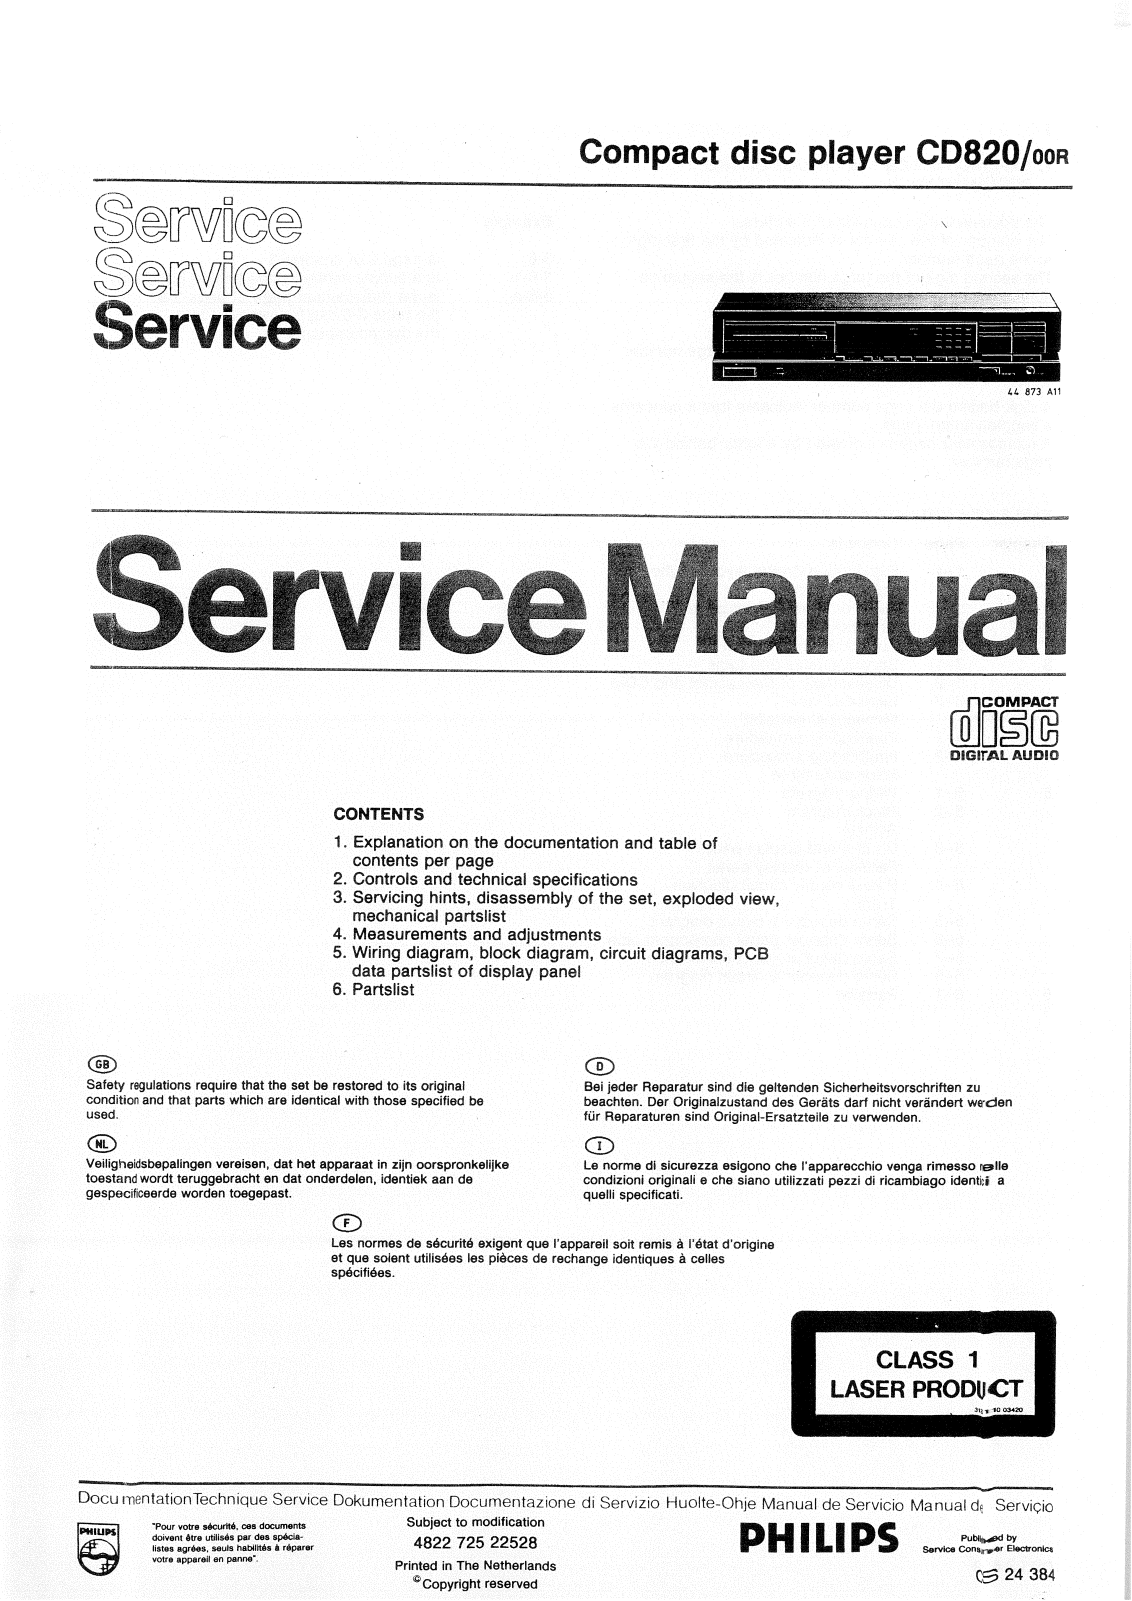 Philips CD-820 Service Manual